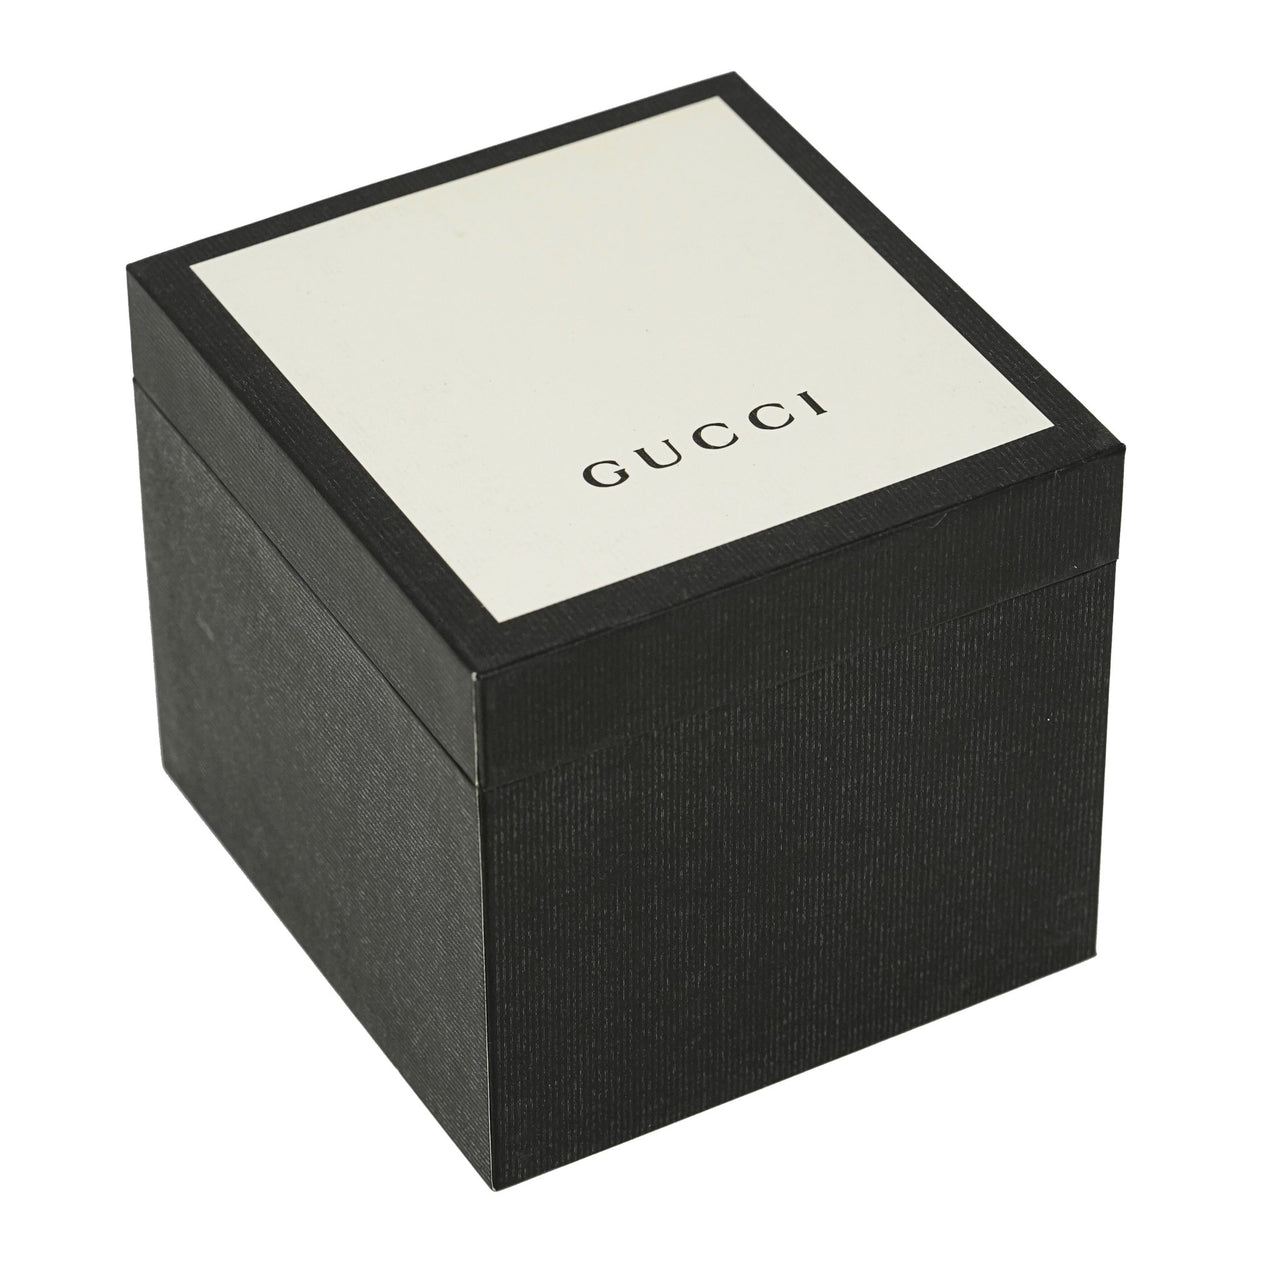 Gucci Men's Watch Dive Silver Matte Black YA136301B - Watches & Crystals